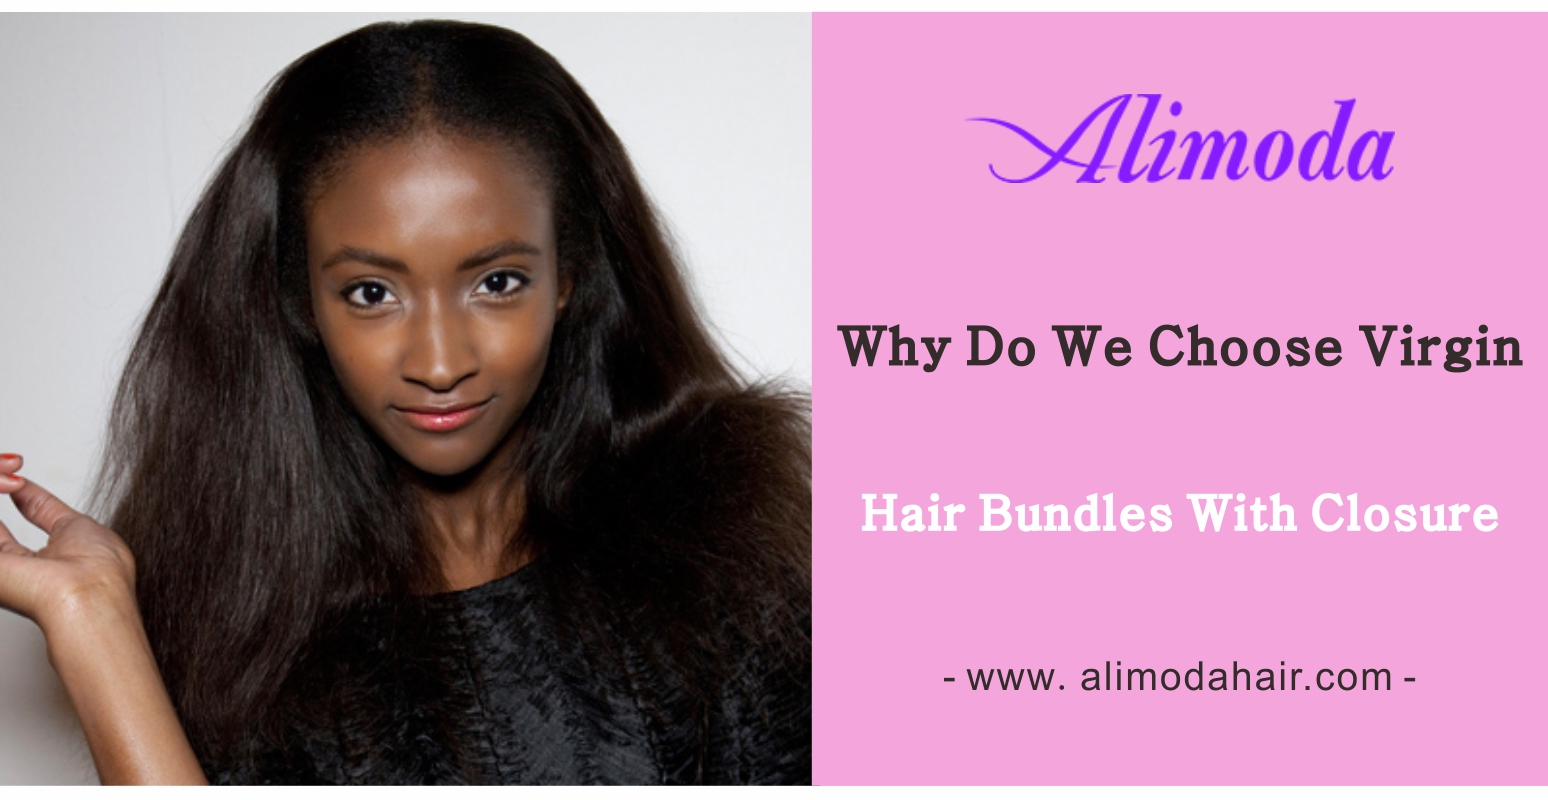 Why do we choose virgin hair bundles with closure?